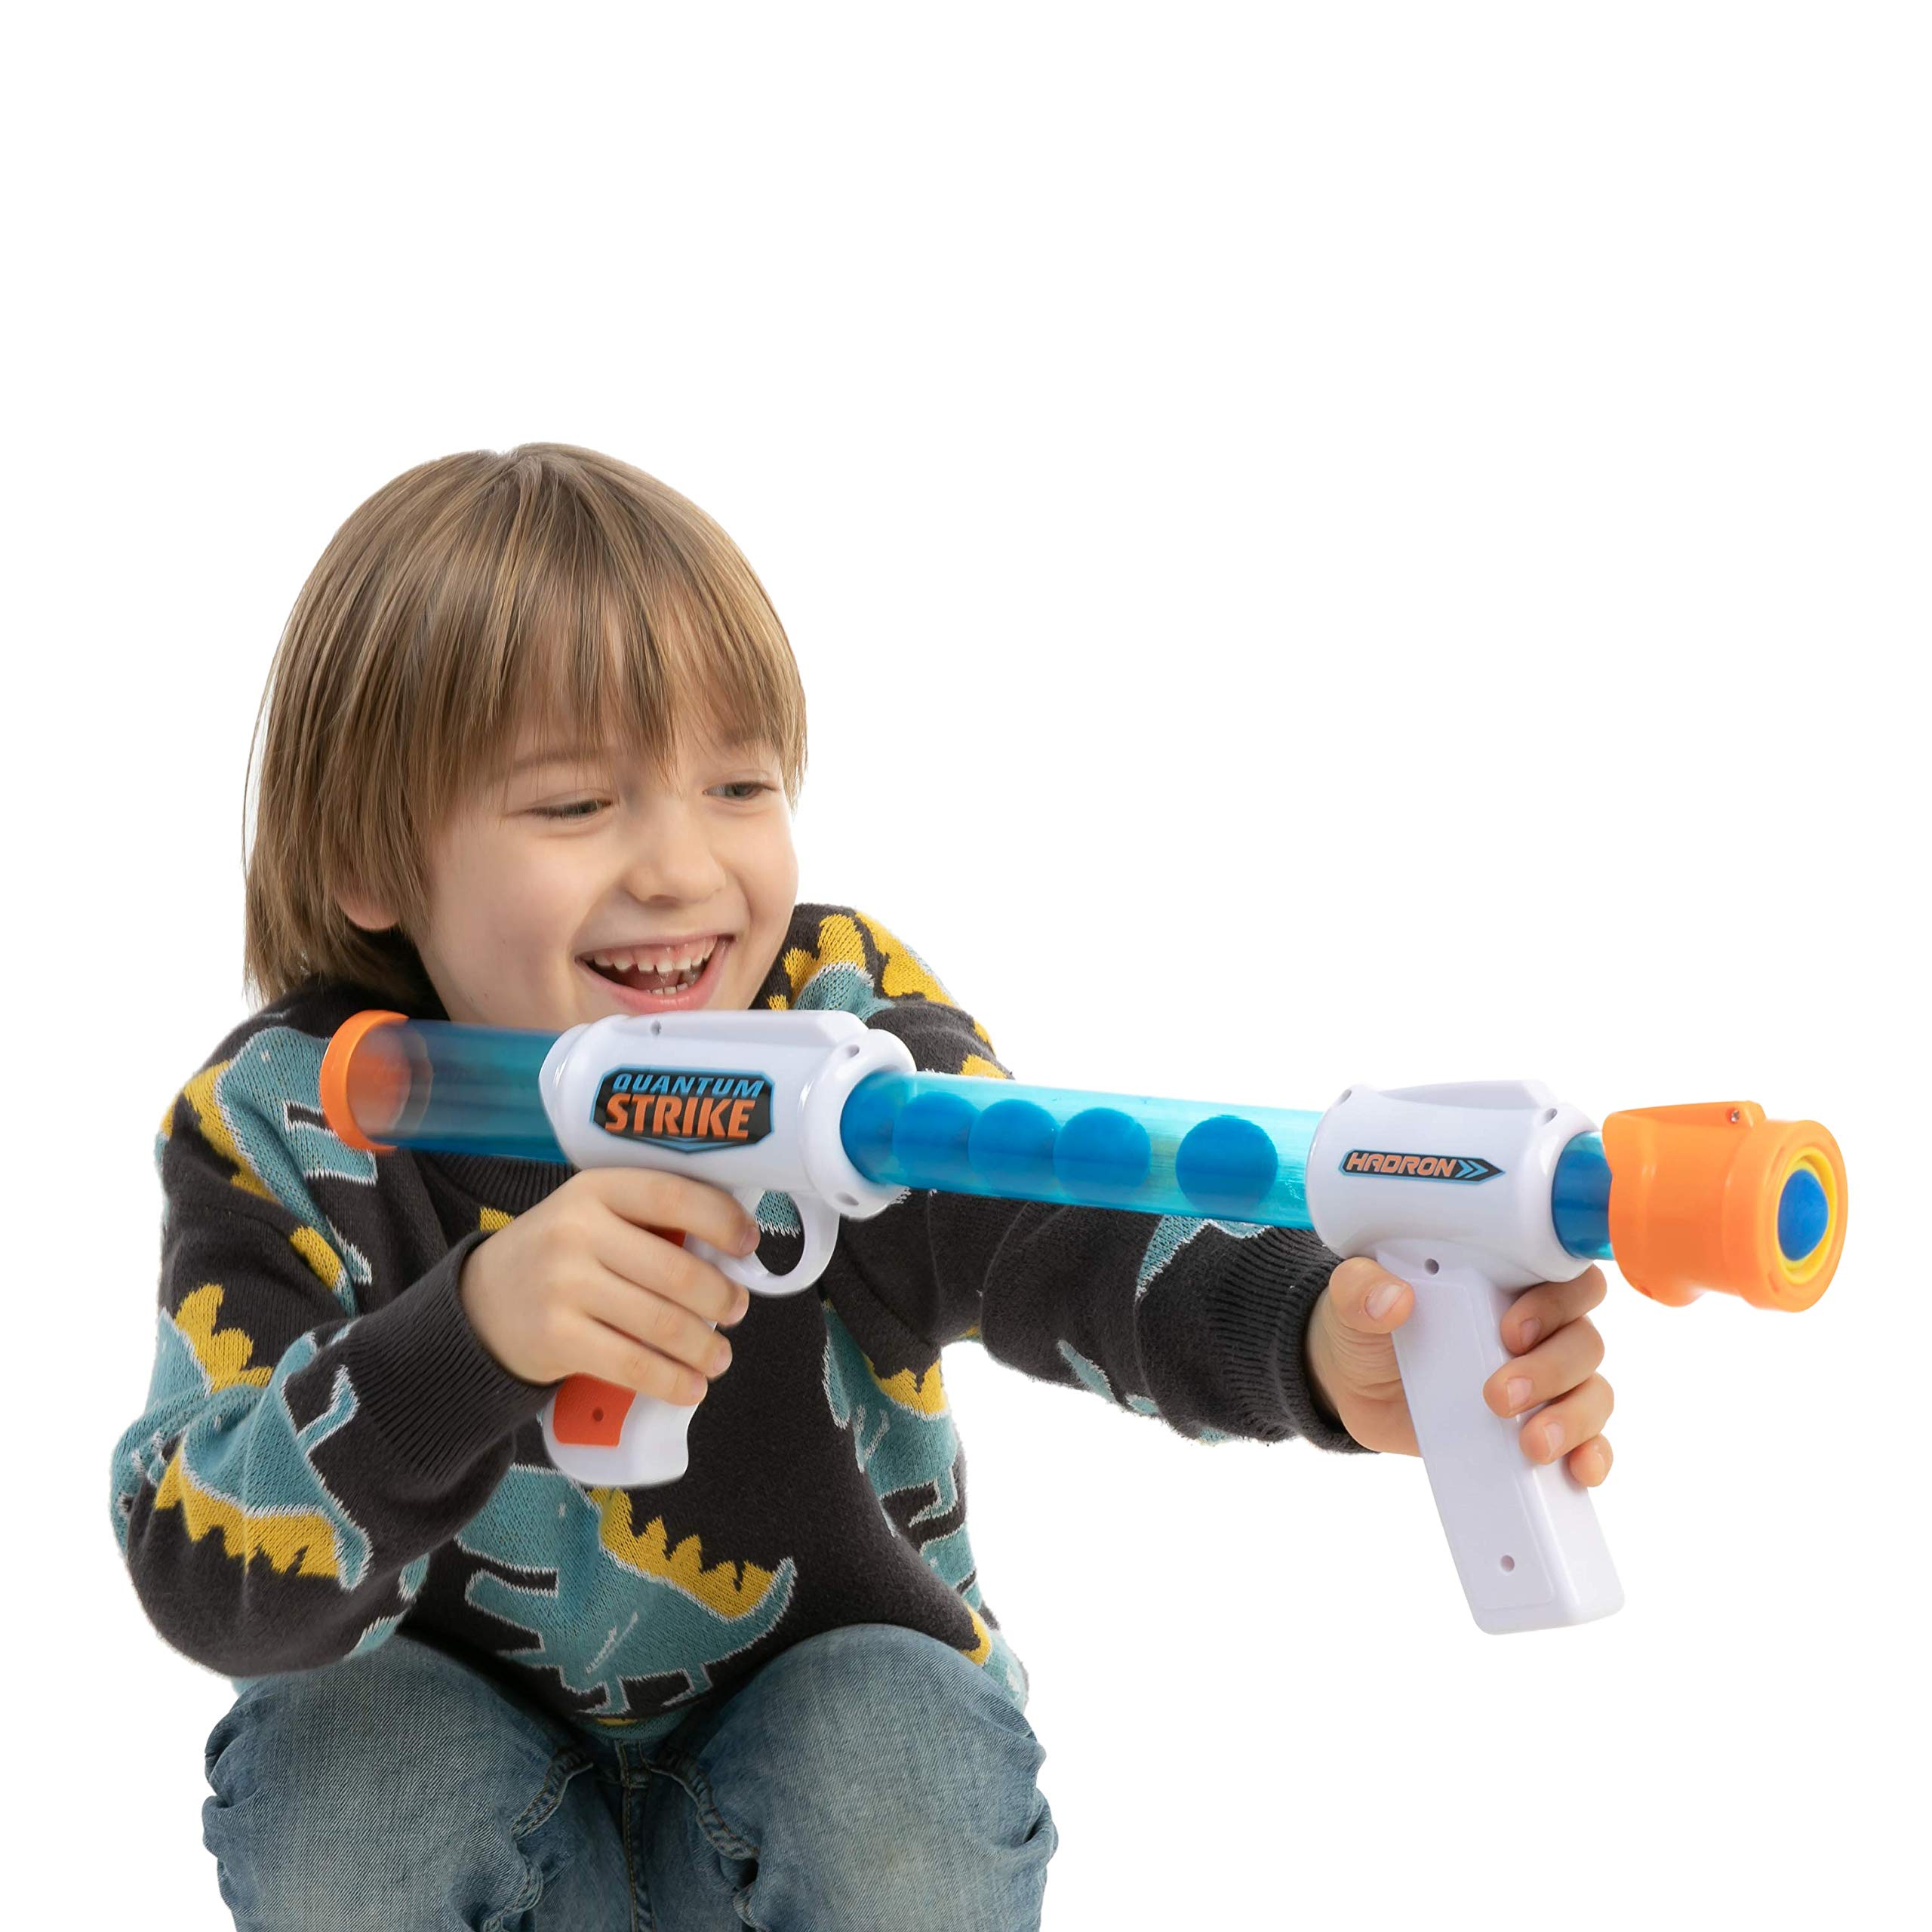 JOYIN Foam Ball Popper Gun Toy Set with Standing Shooting Target, Foam Ball Popper Air Toy Guns, 24 Foam Balls, Shooting Game for Kids Indoor Outdoor Play